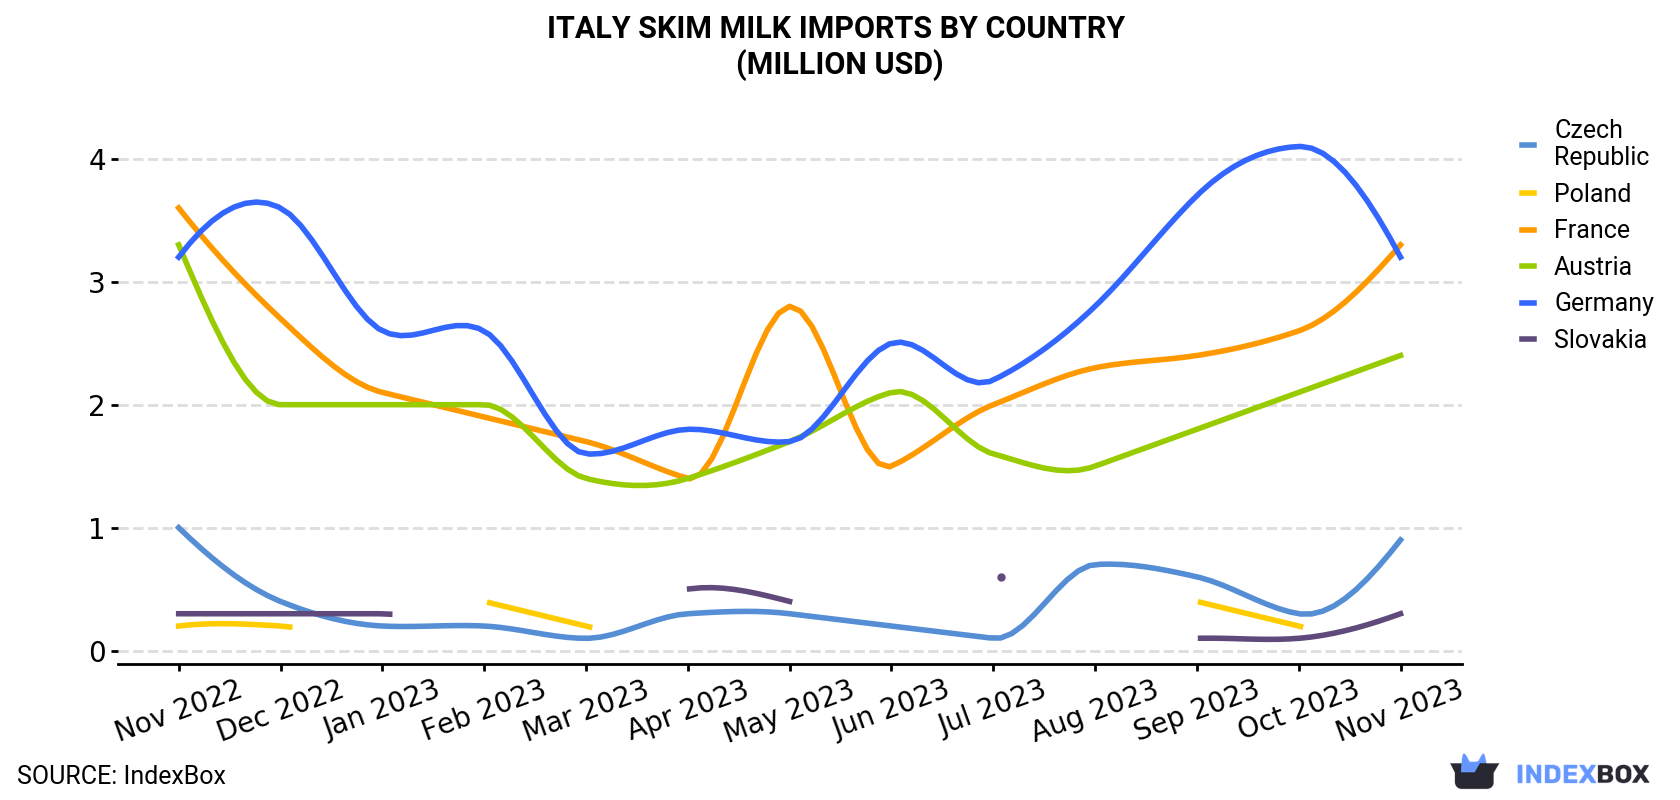 Italy Skim Milk Imports By Country (Million USD)